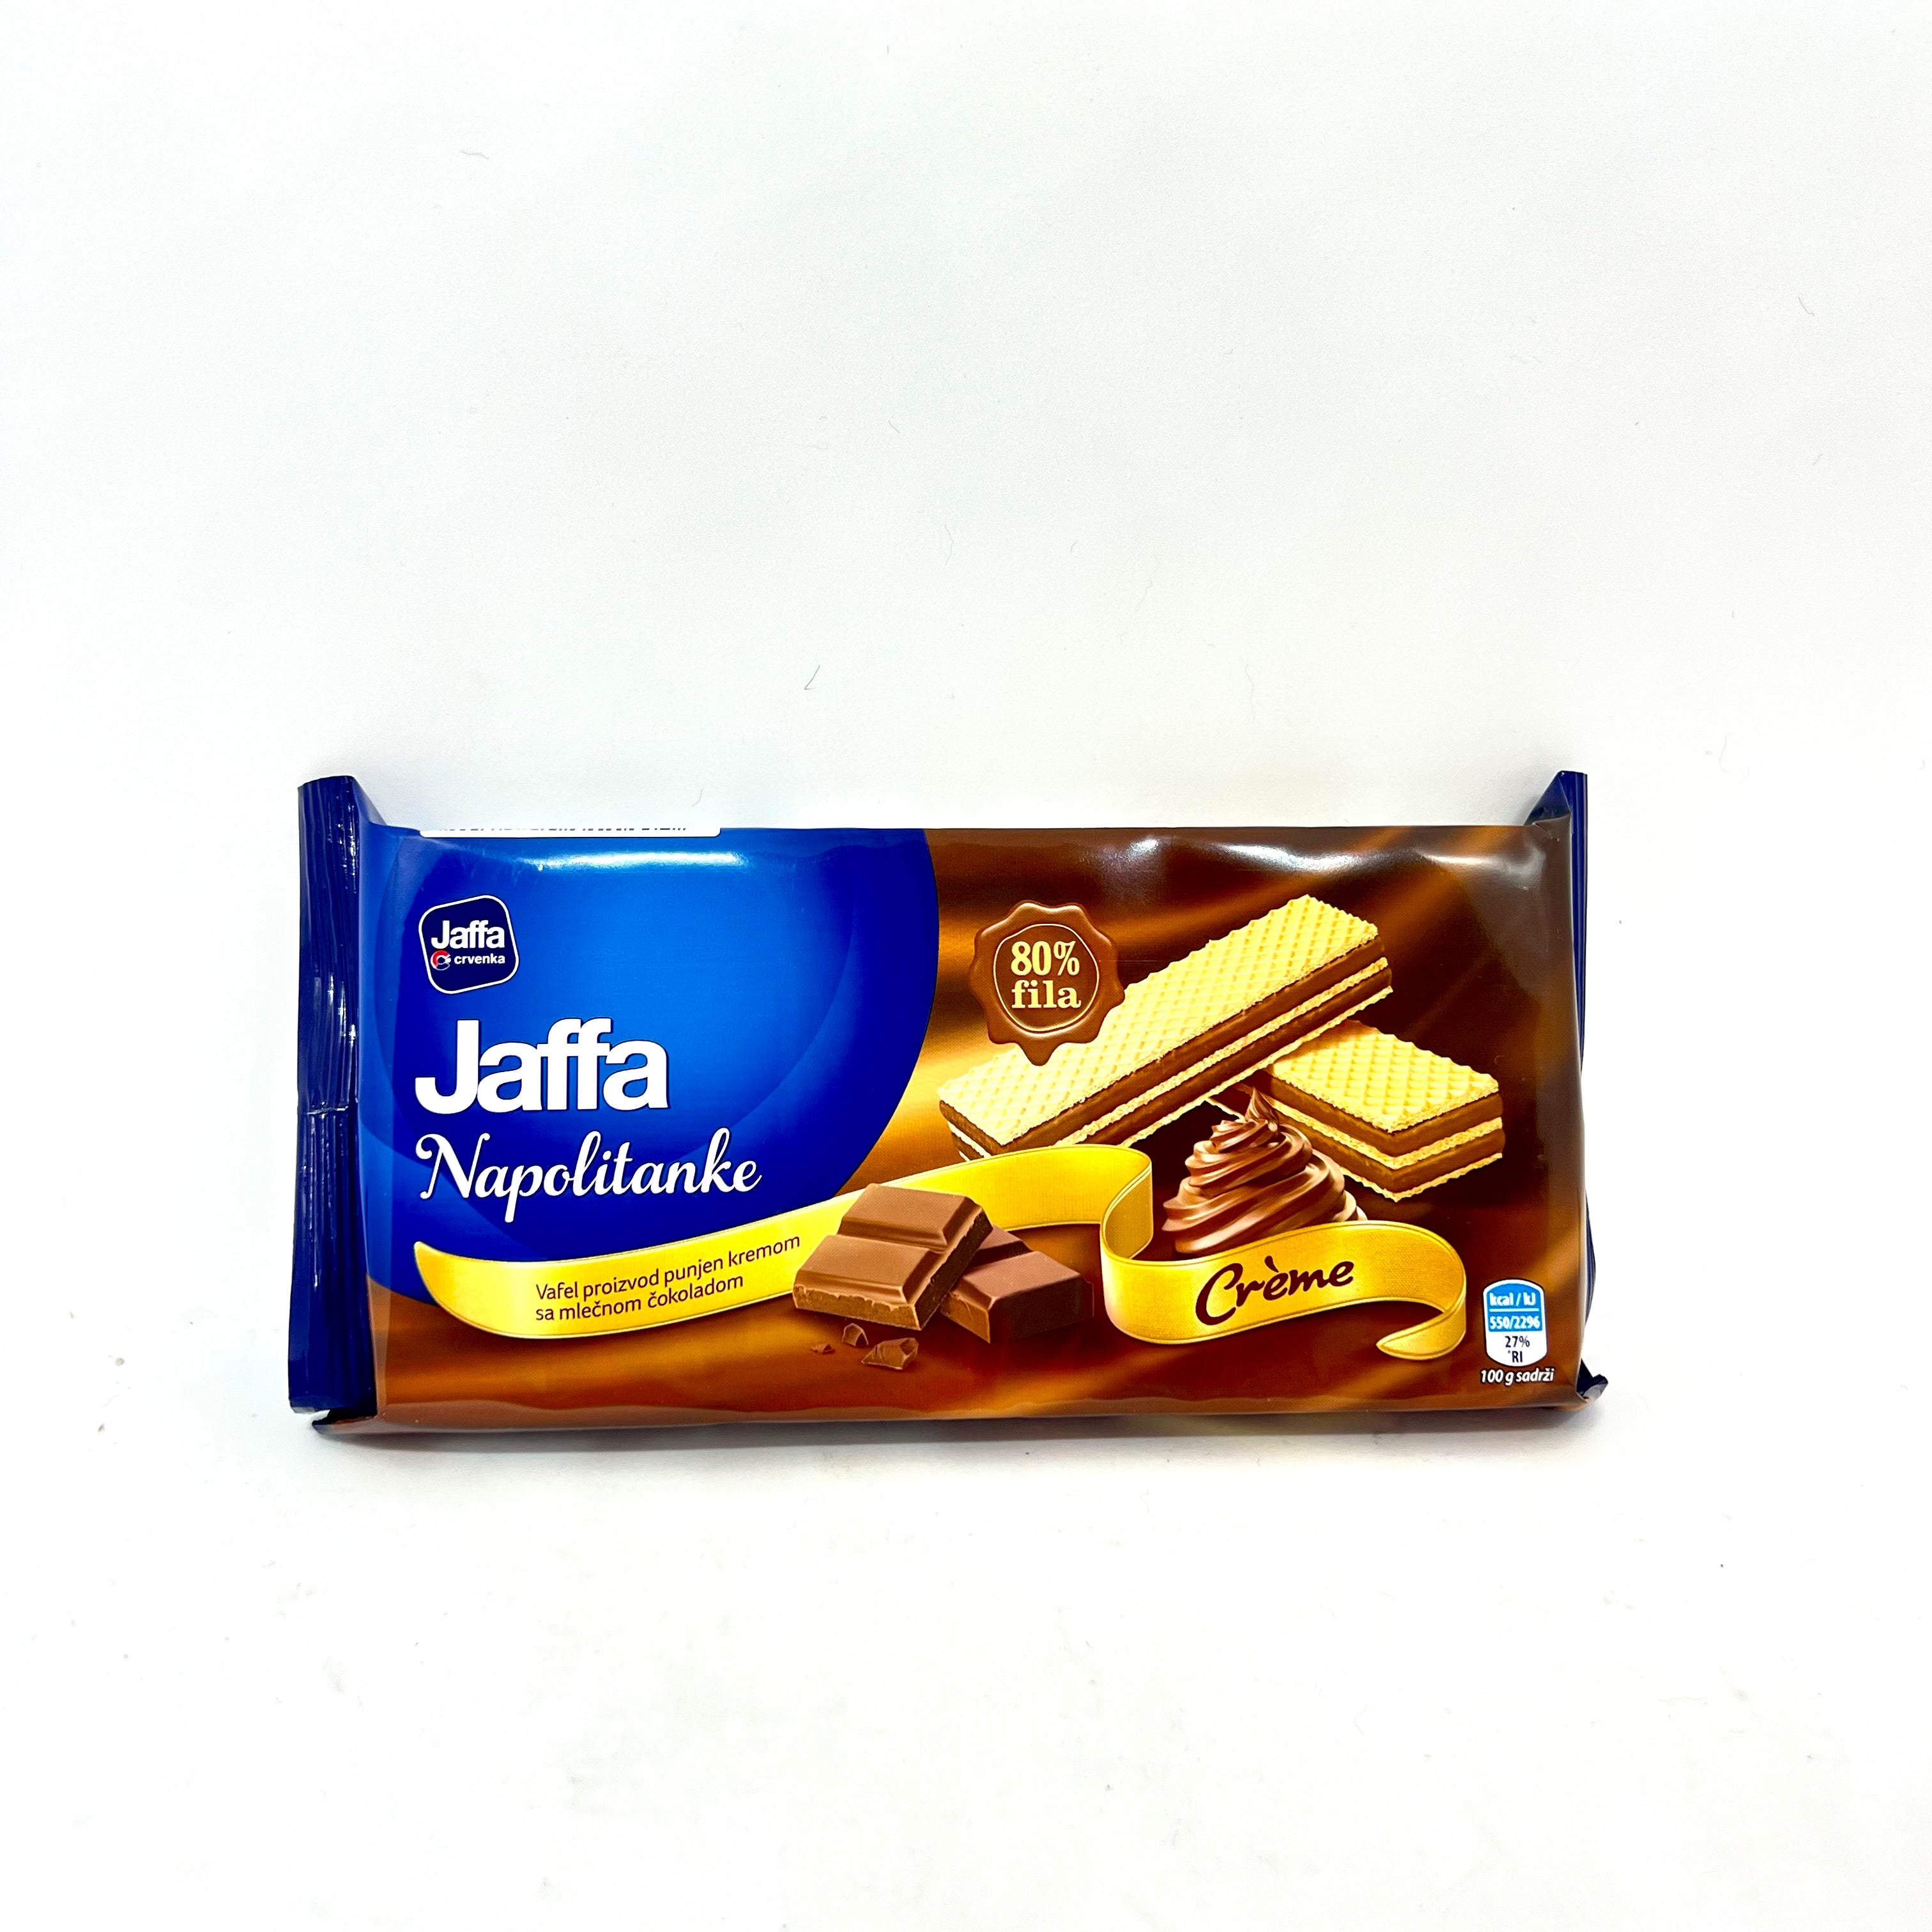 CRVENKA Chocolate Cream Wafers Napolitanke 187g